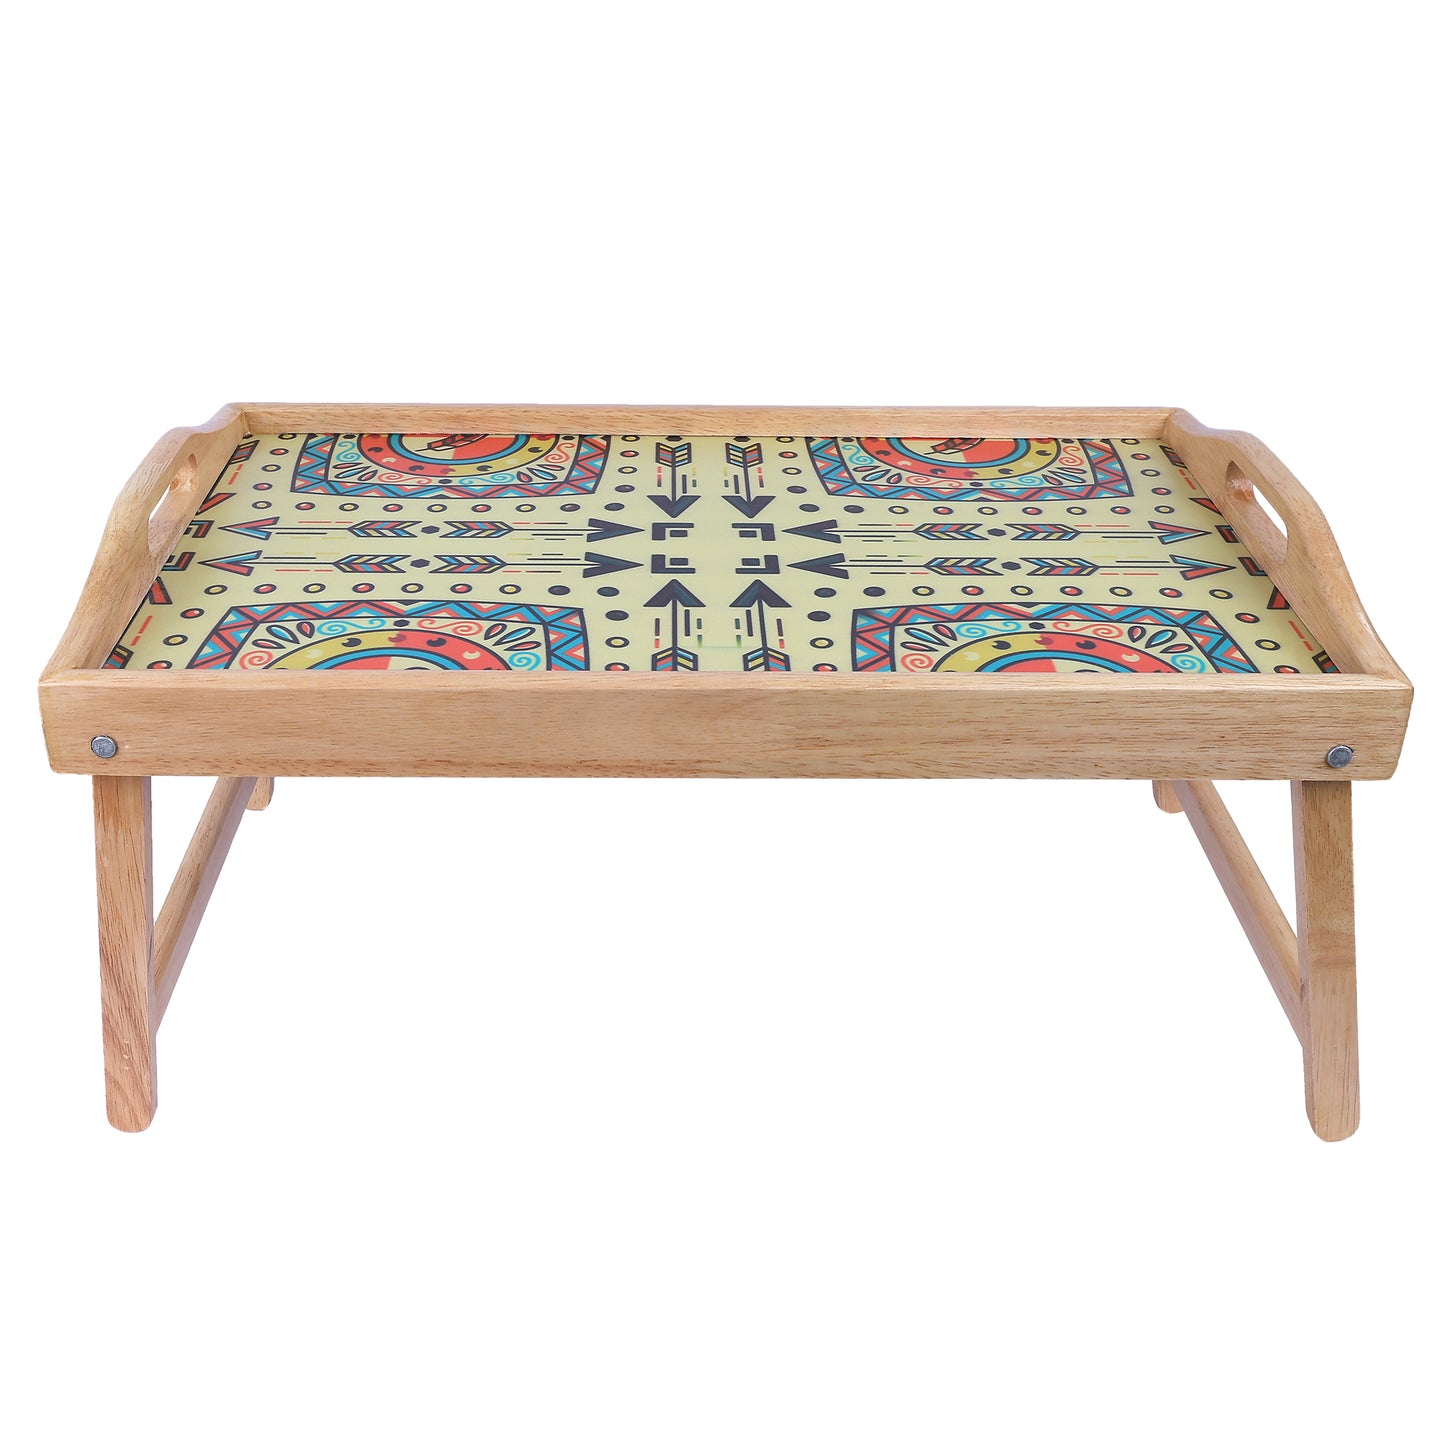 ROGER & MORIS Breakfast Folding Table (Rubber Wood) (Size 49.5cm X 31cm X 6cm)